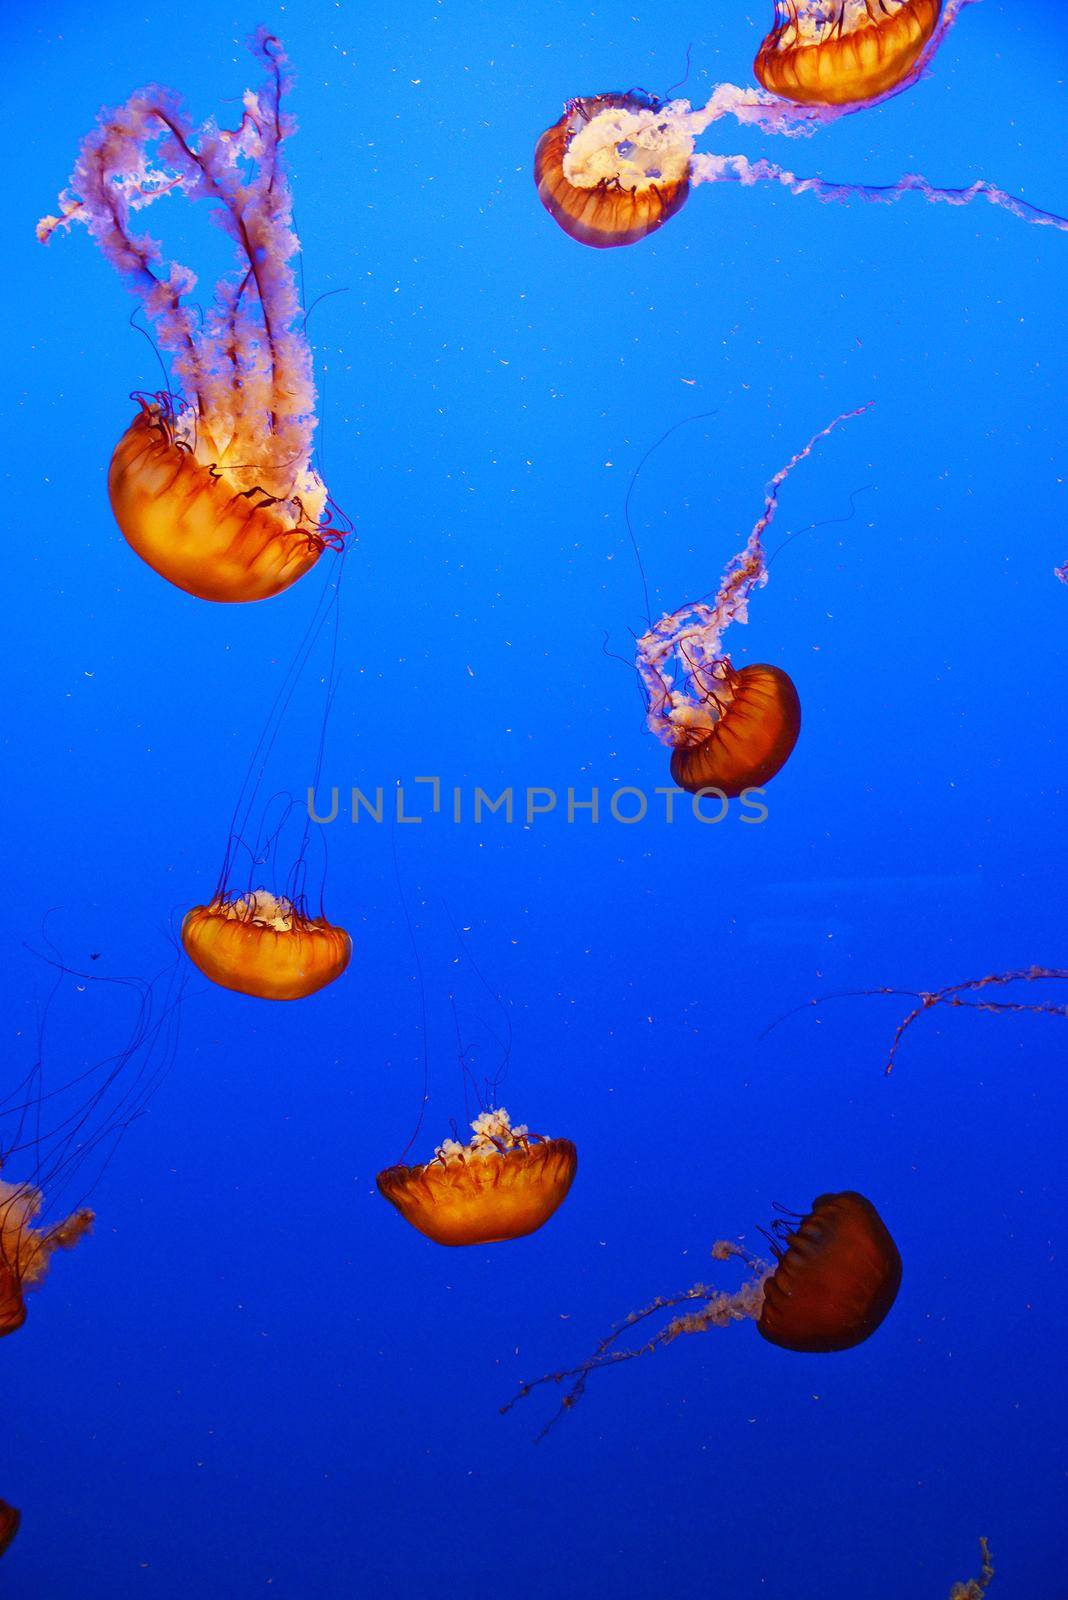 orange nettle jellyfish with blue background